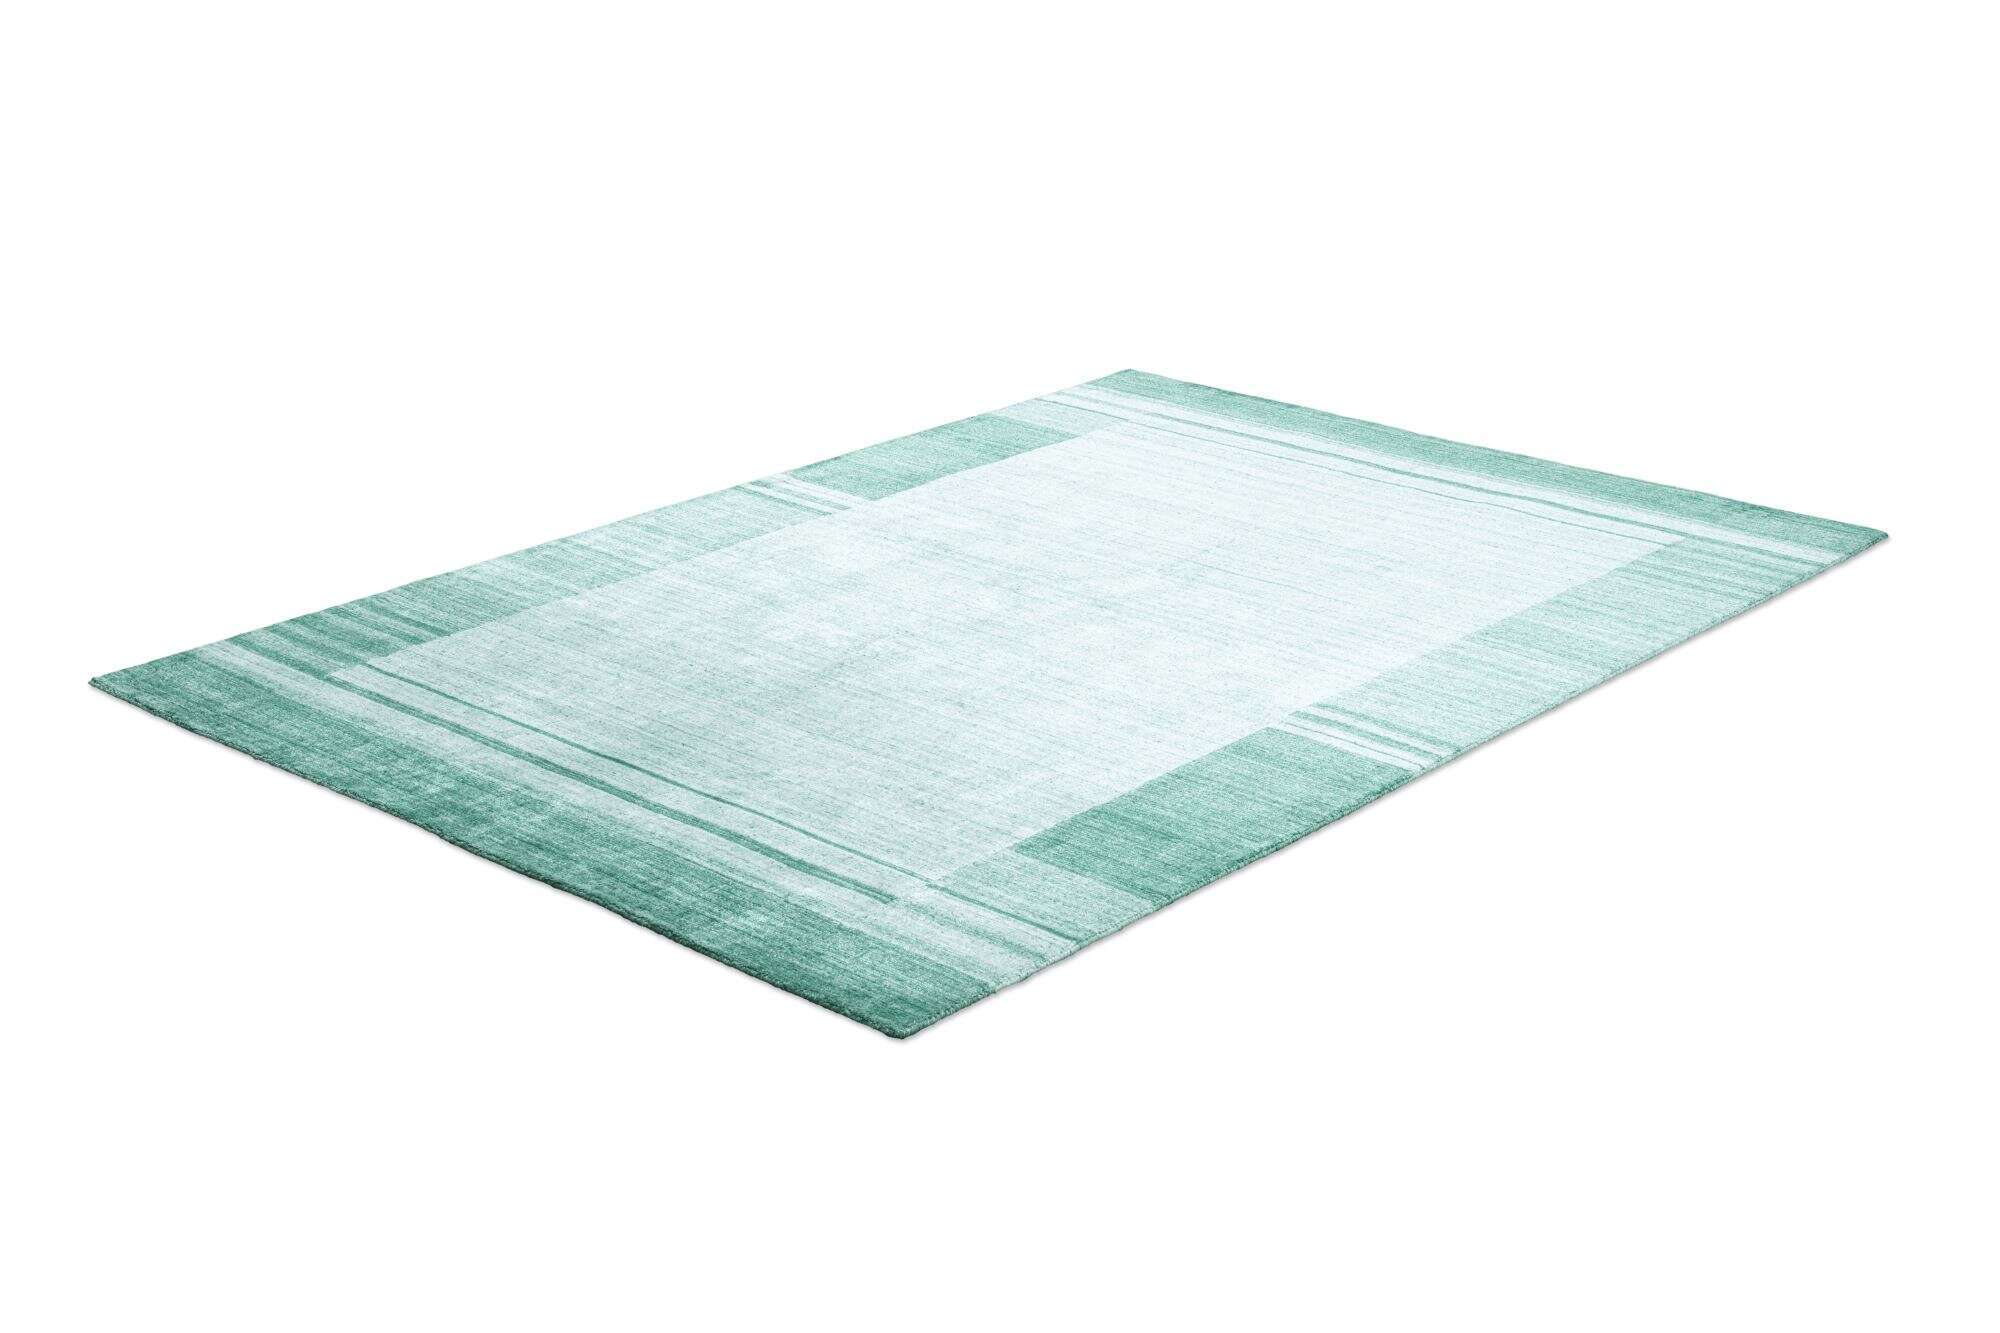 Teppich Modern Nevada Viscose Handgewebt 160x230cm türkis grün